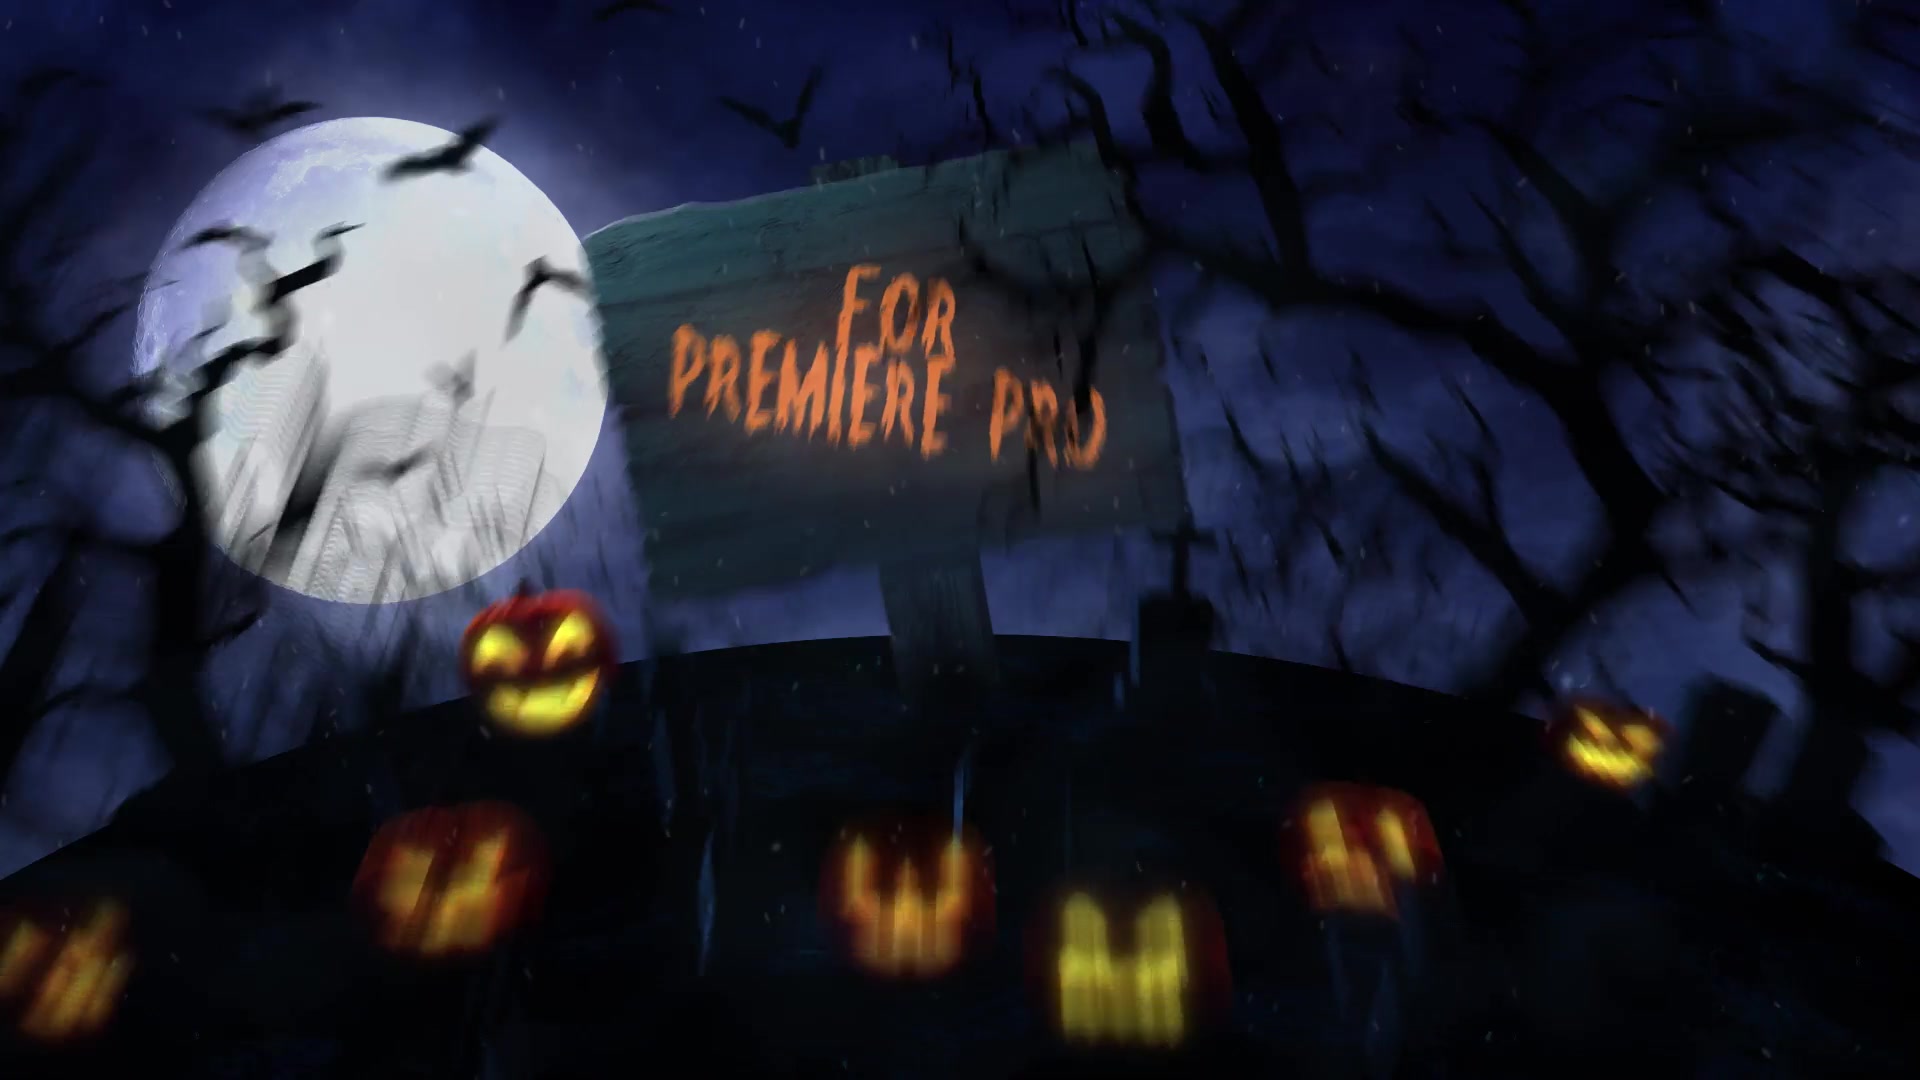 Halloween Opener Premiere Pro Videohive 24824324 Premiere Pro Image 4